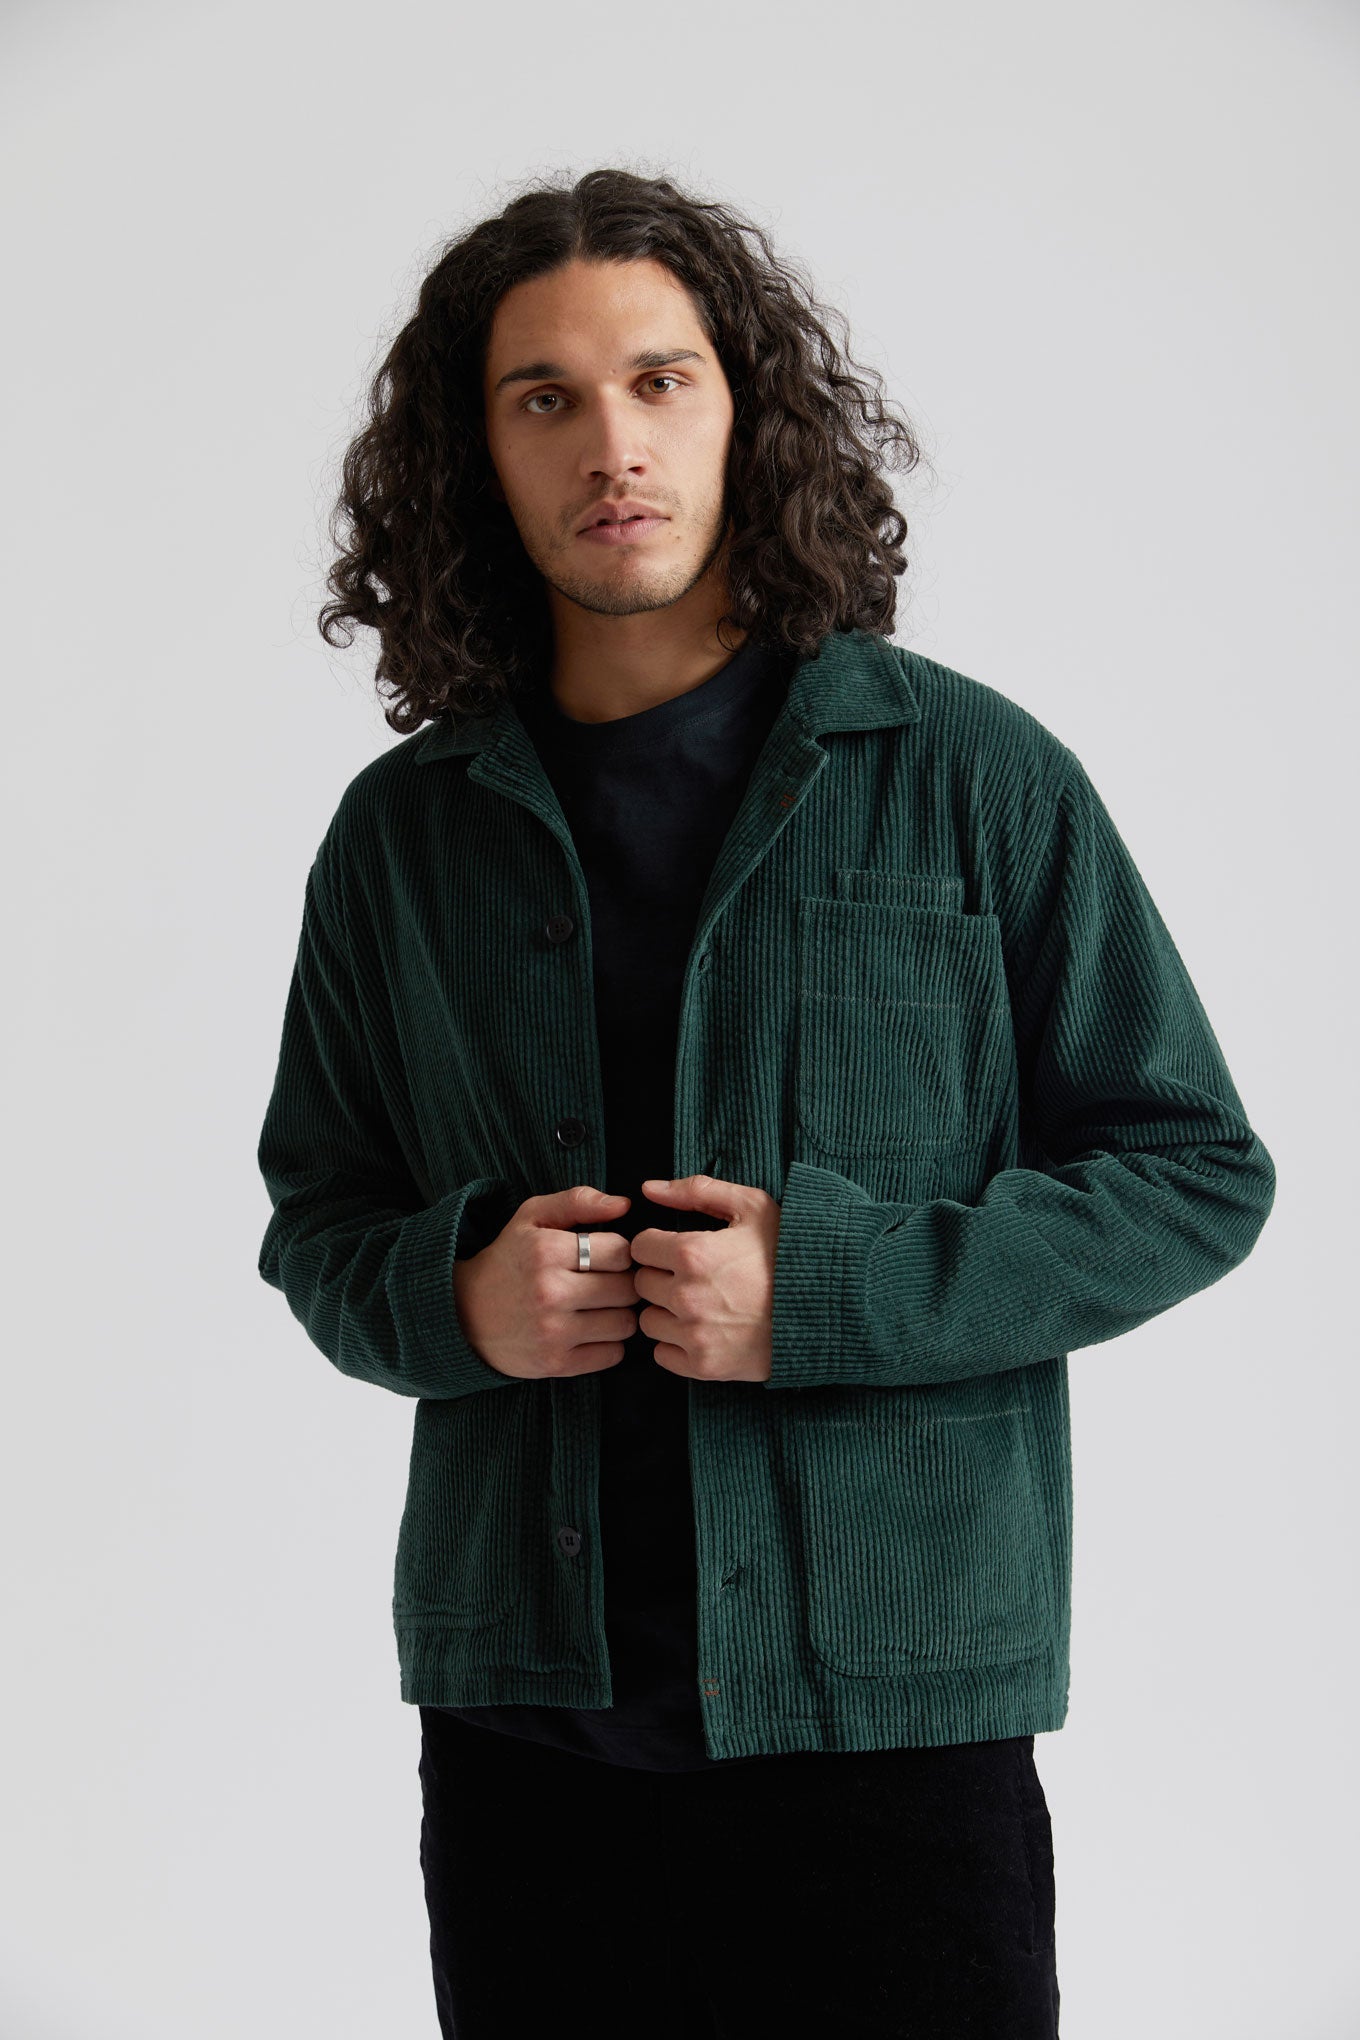 Dark green corduroy jacket MONDRIAN made of 100% organic cotton from Komodo